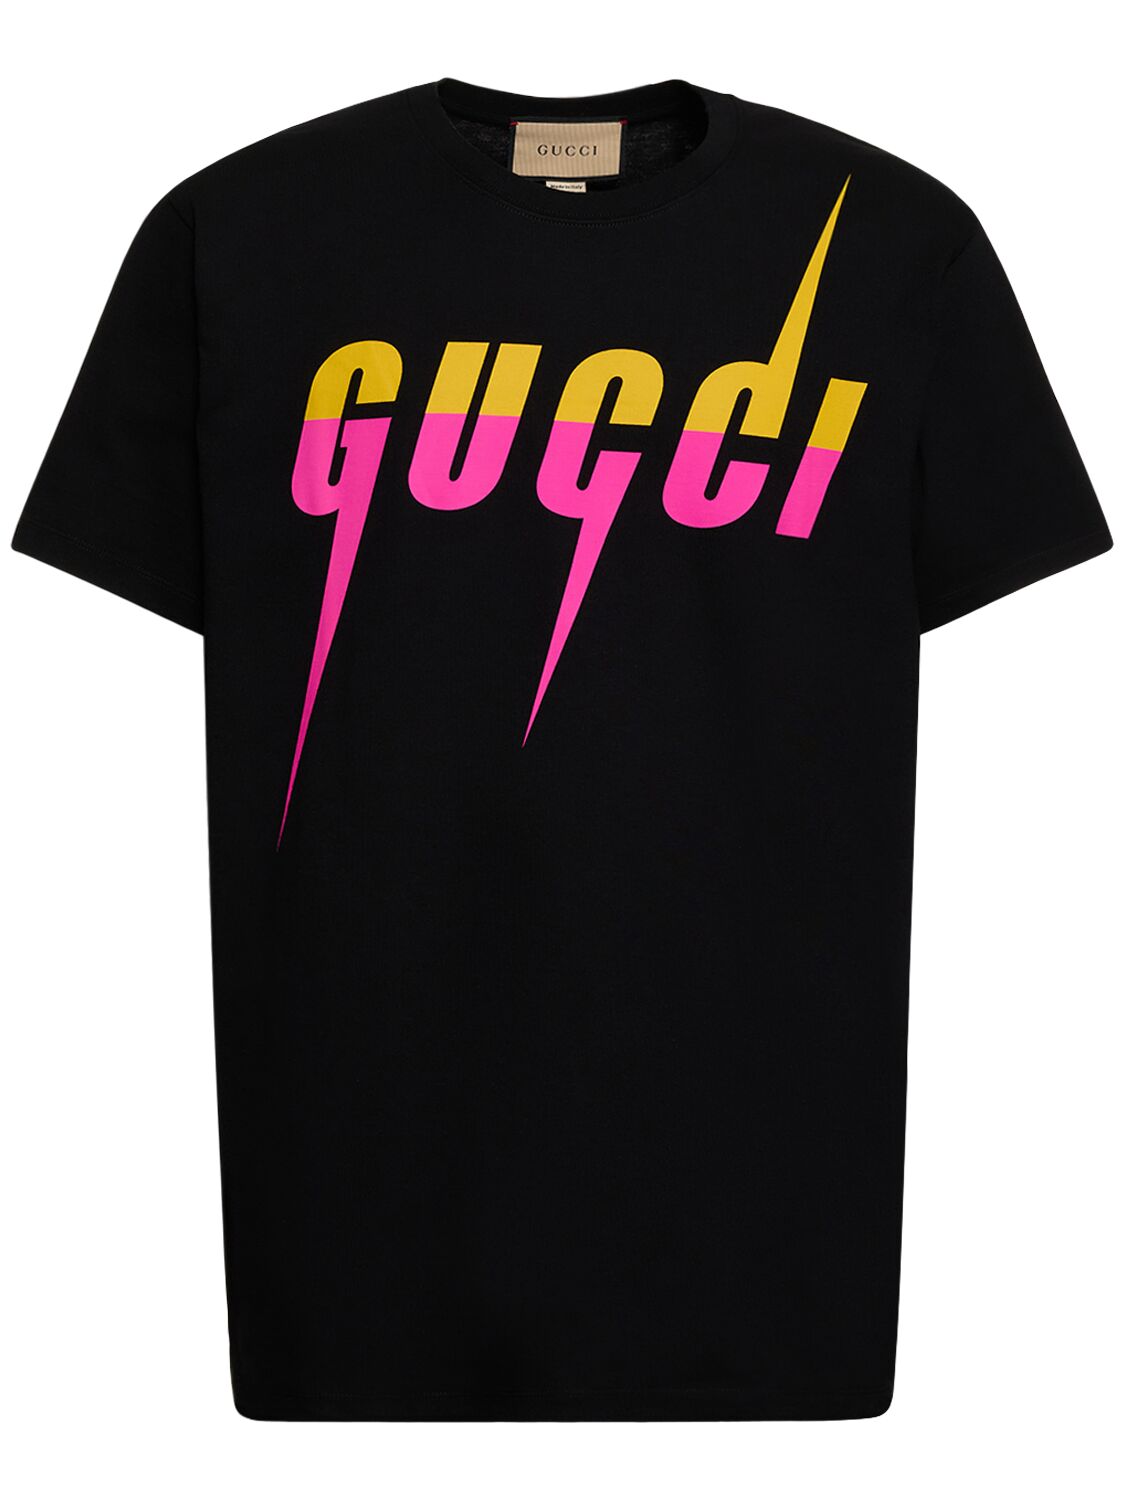 Gucci Printed Cotton T-Shirt